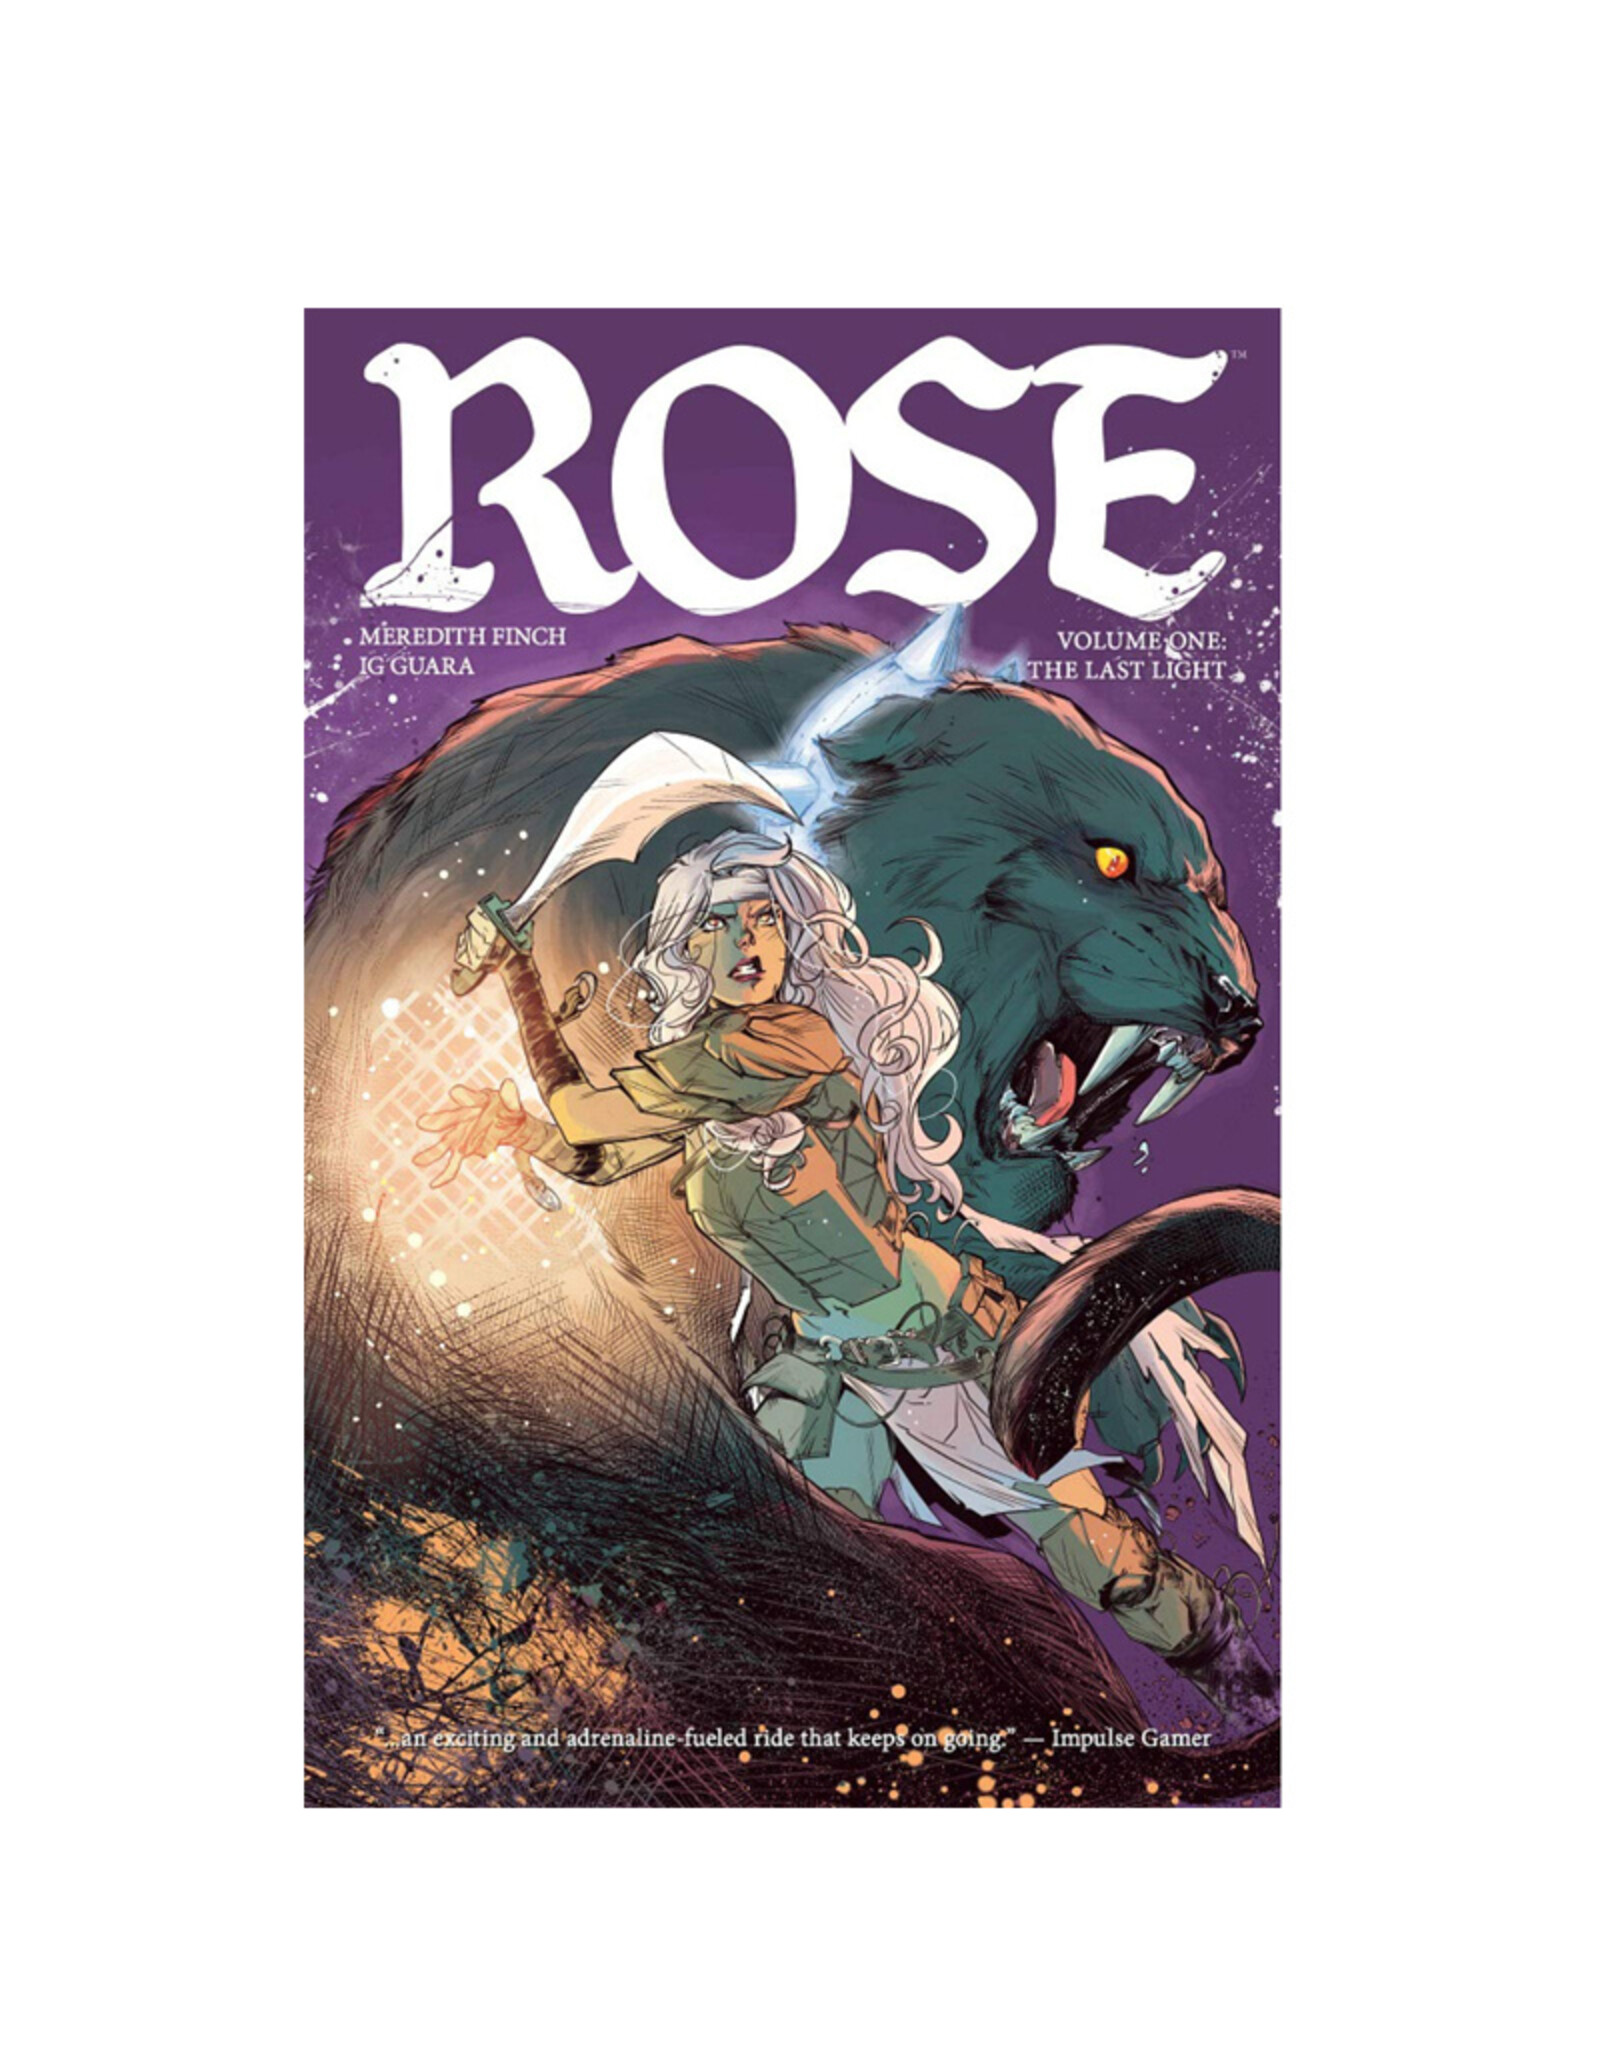 Image Comics *CLEARANCE* Rose TP Volume 01